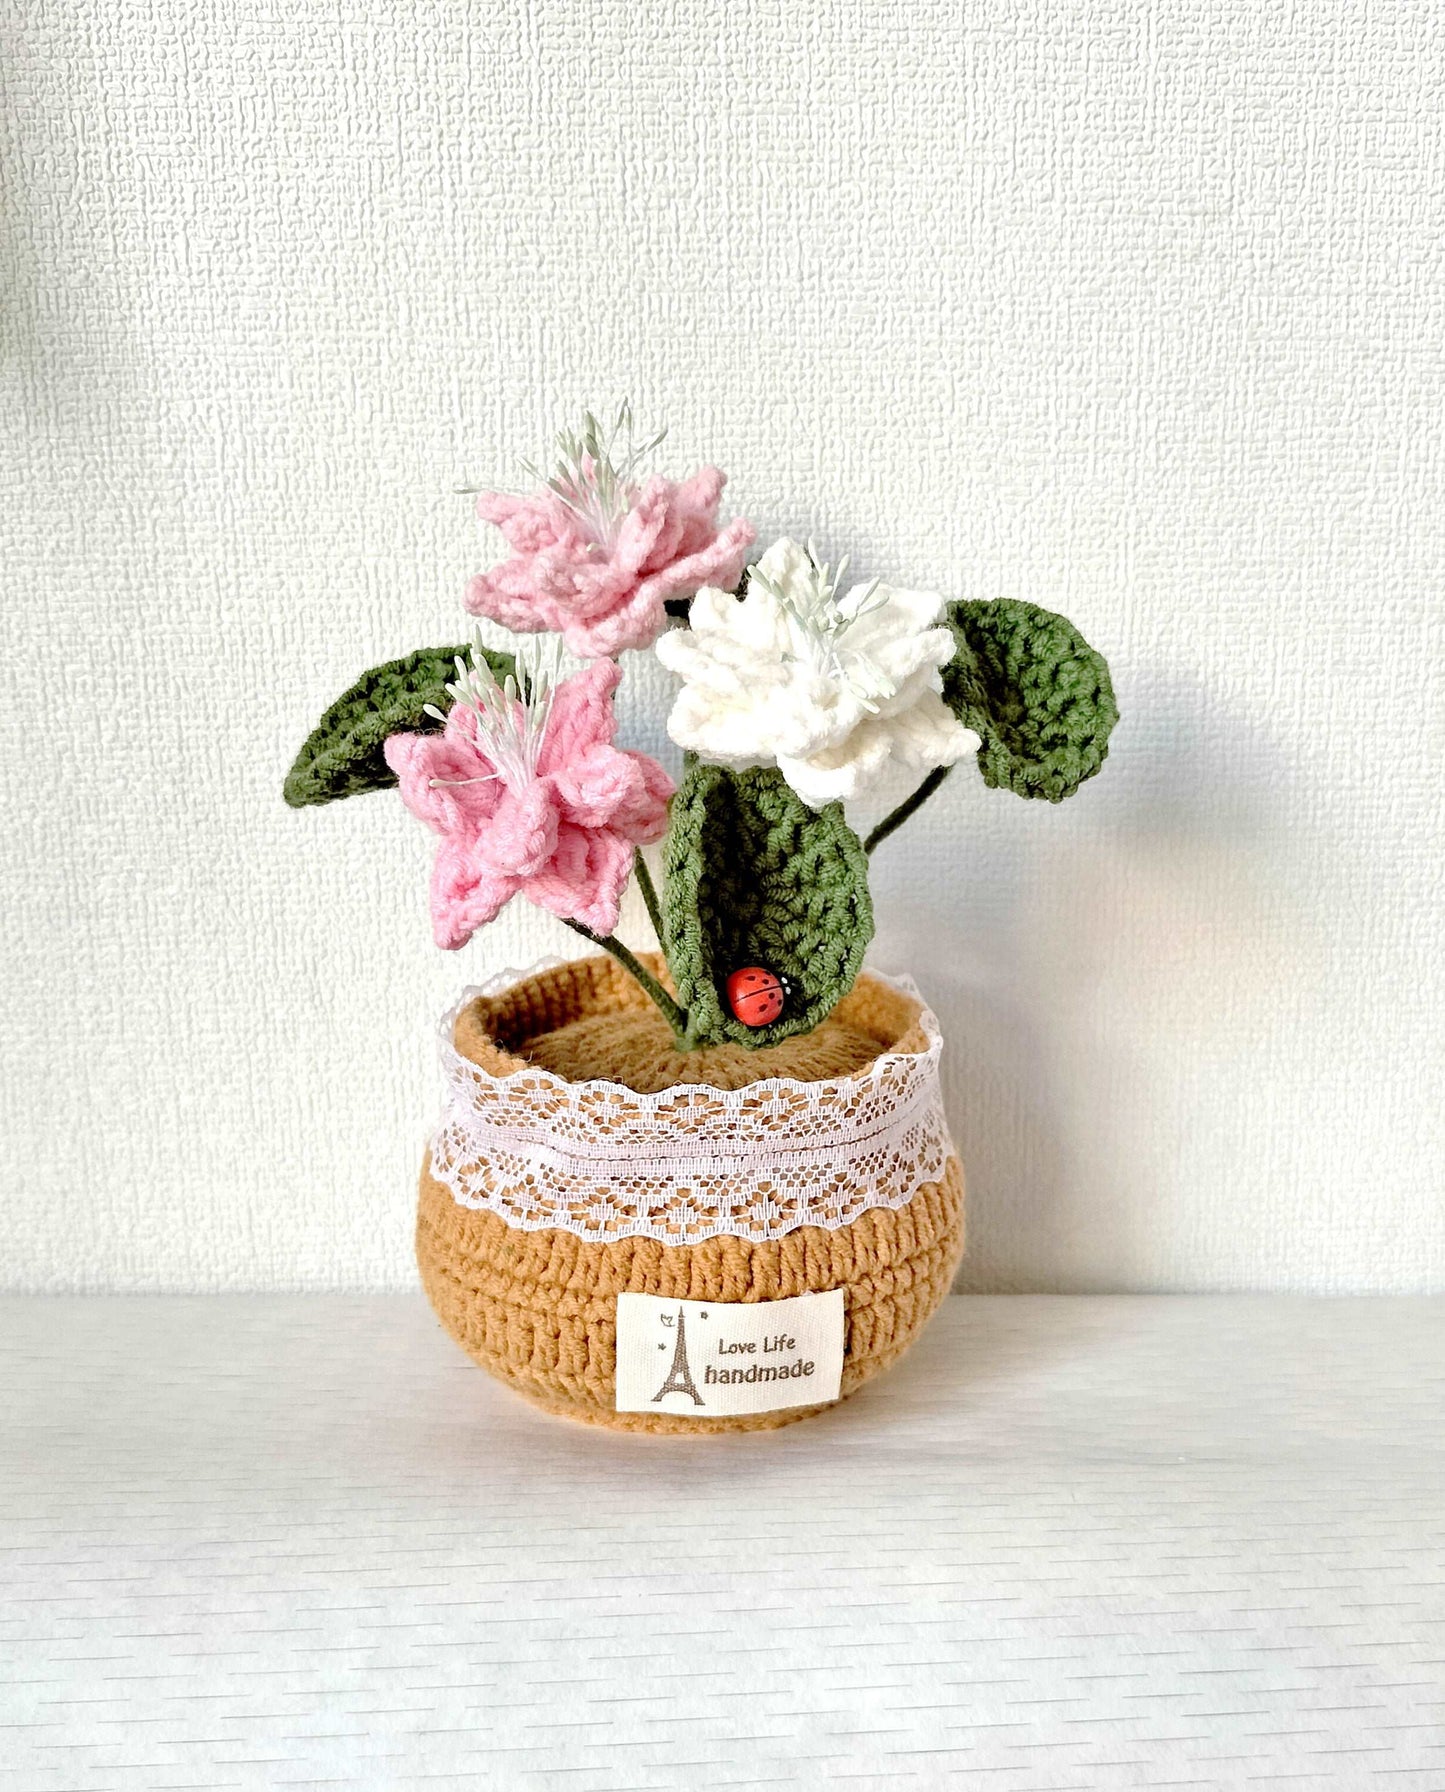 Delicate Handmade Crochet Flower Arrangements for Events